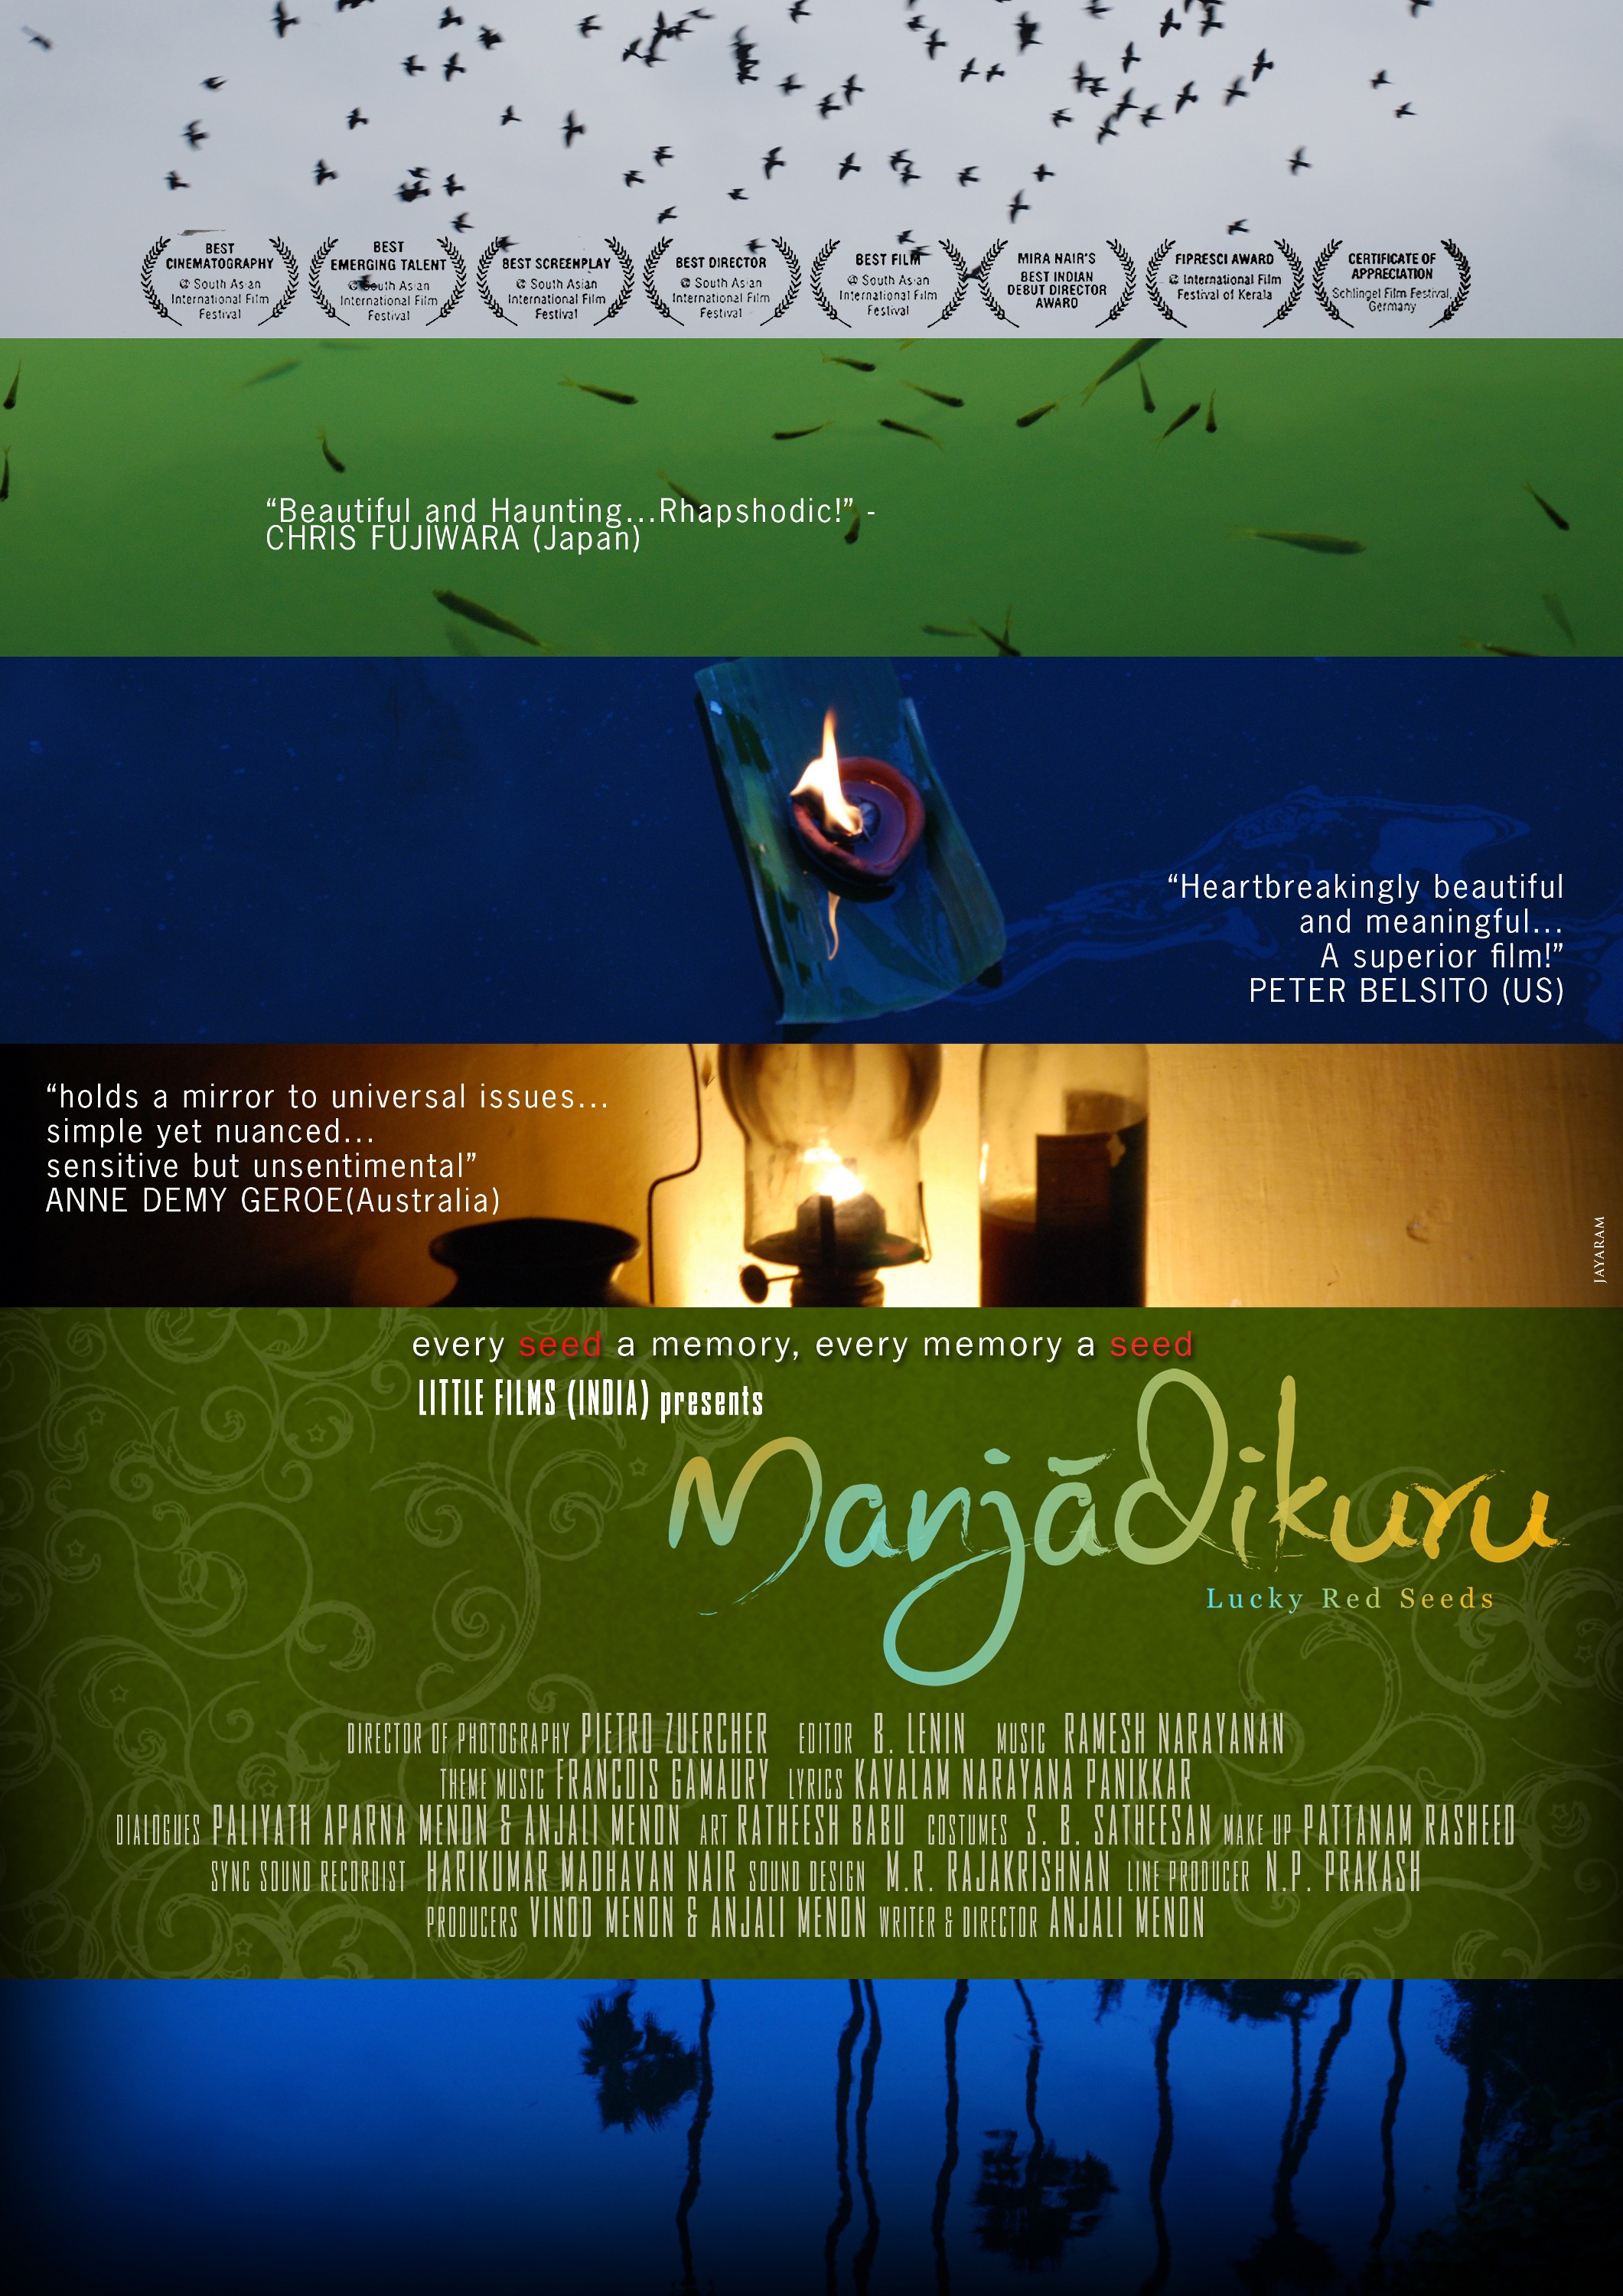 Mega Sized Movie Poster Image for Manjadikuru (#1 of 4)